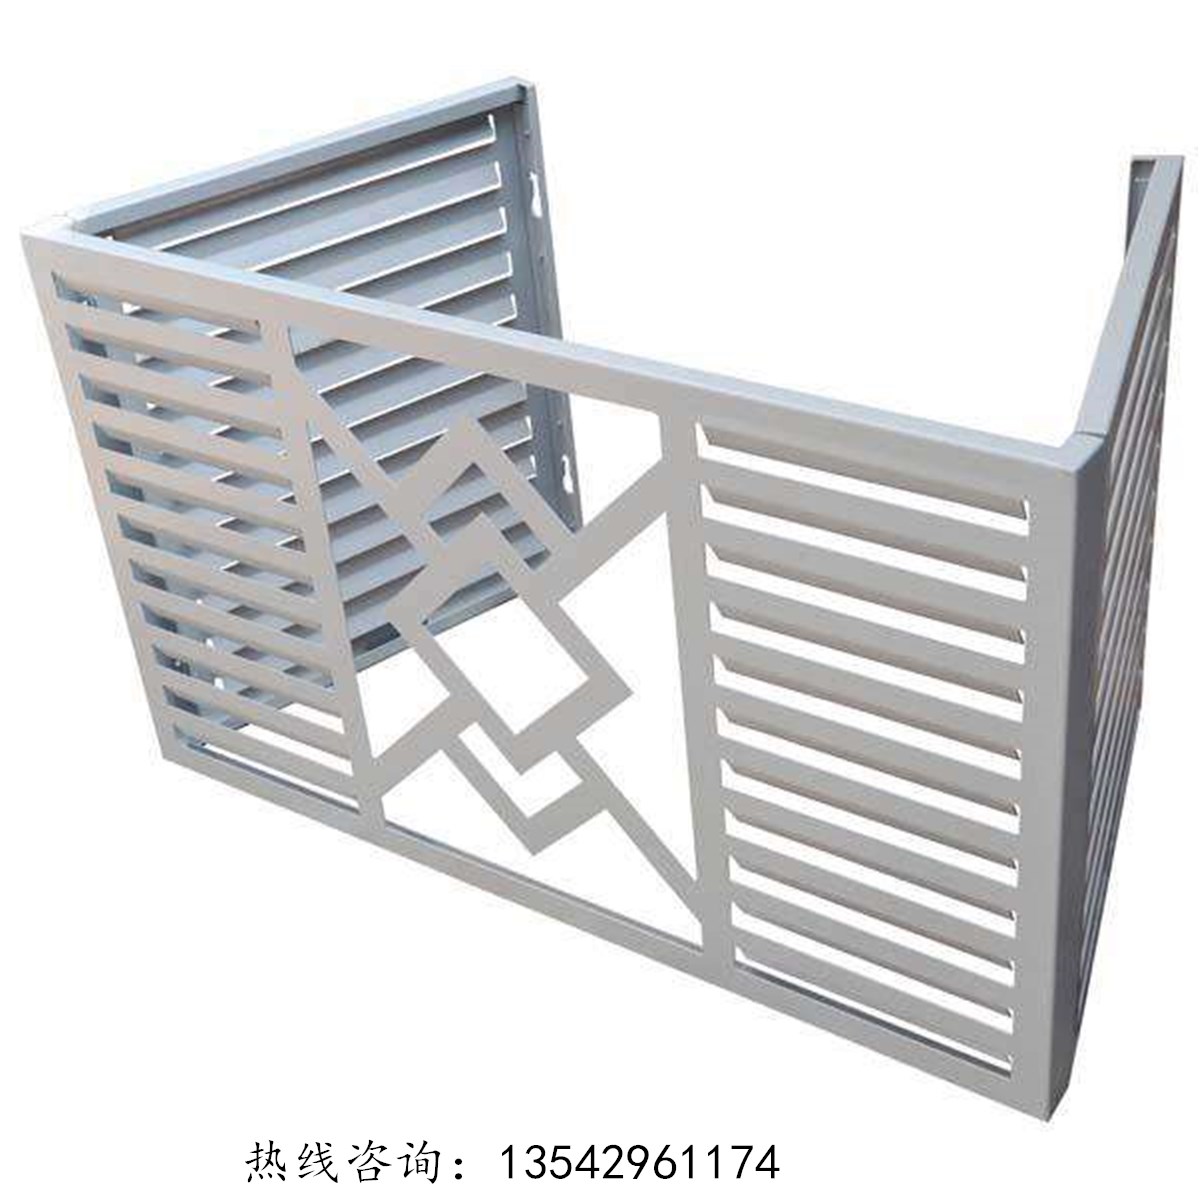 Metal Aluminum Air Conditioner Fan Cover Foshan Qi Aluminum Decorative Material Co Ltd